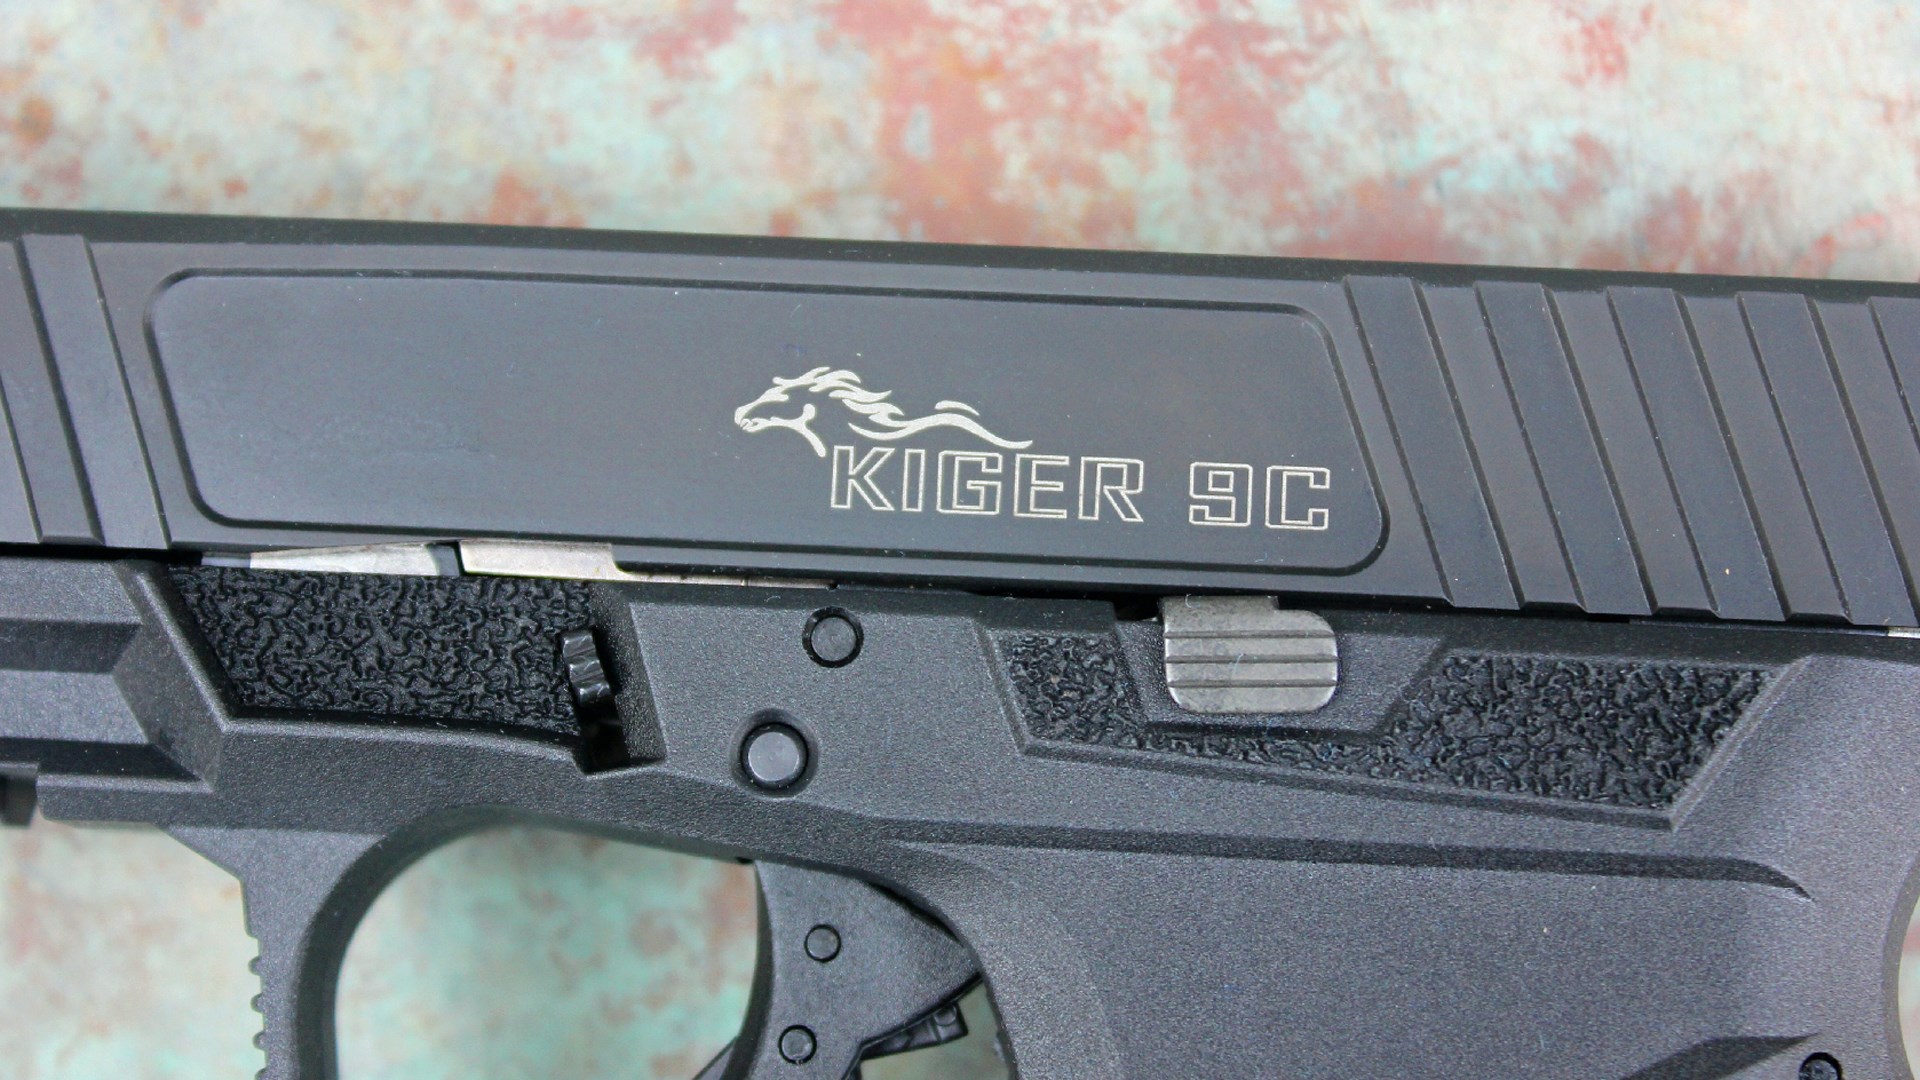 Close-up view of Anderson Manufacturing Kiger 9c pistol 9 mm semi-automatic glock gen 3 handgun black metal horse engraving